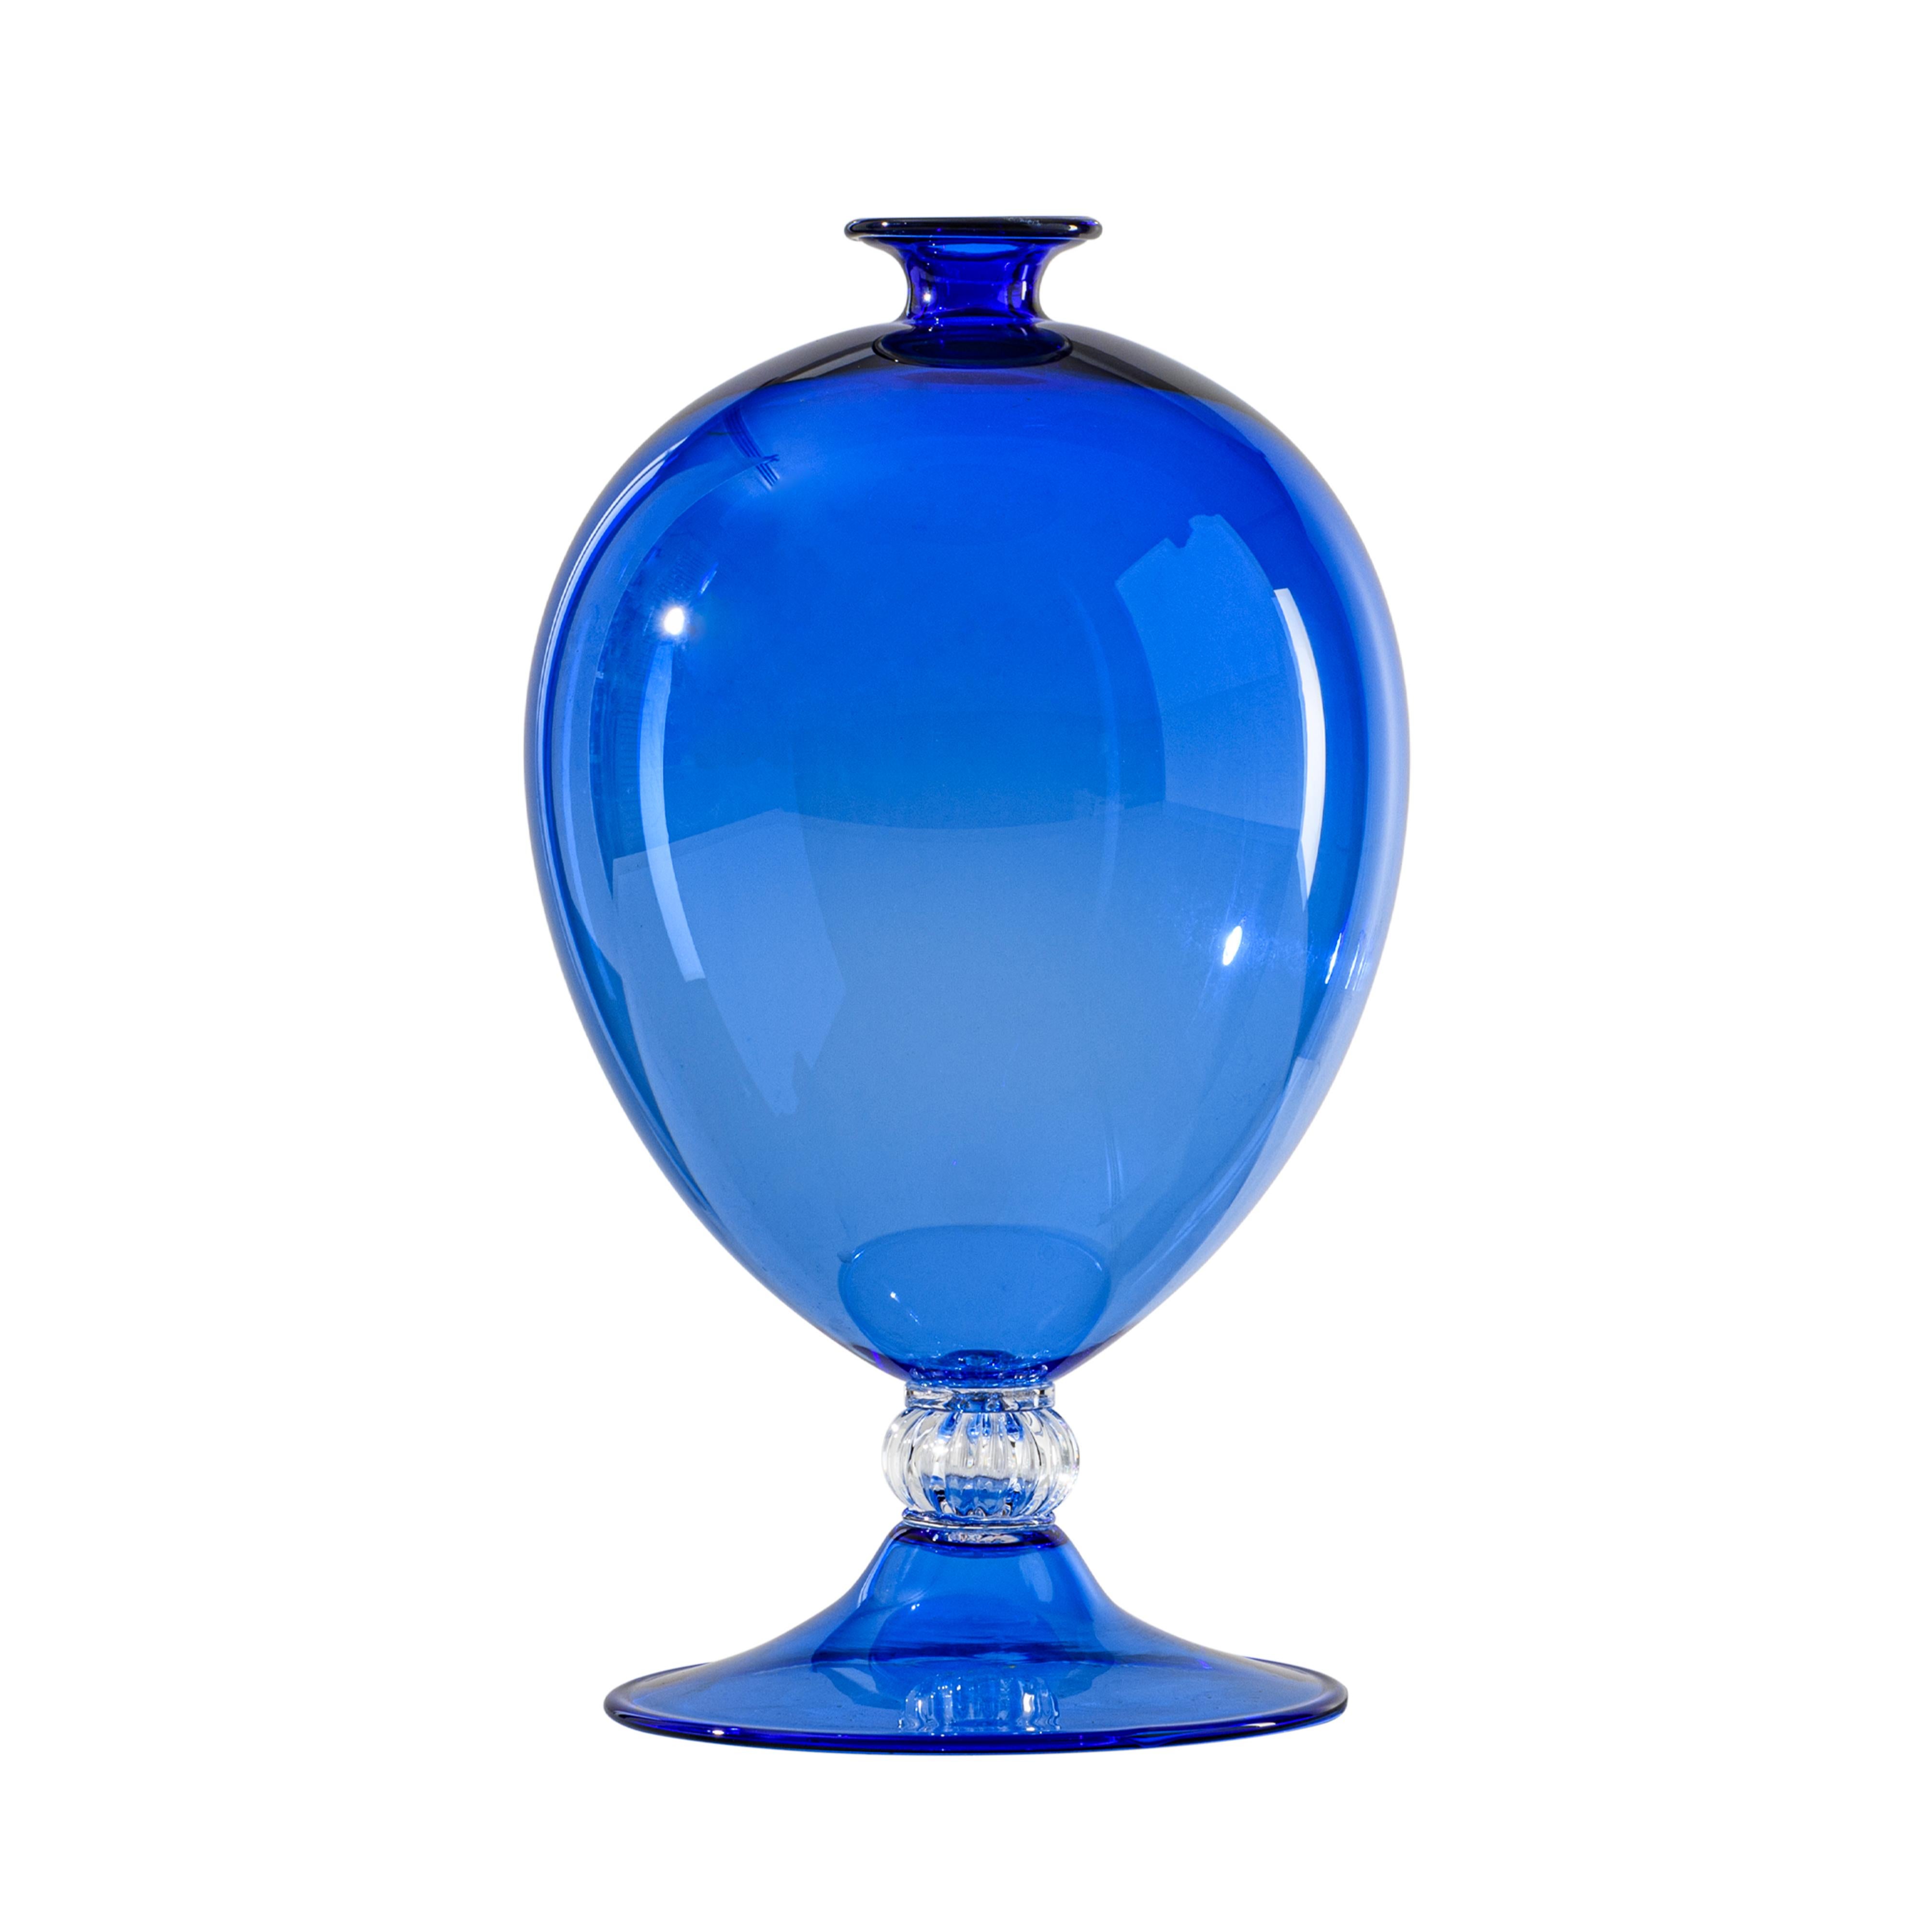 Murano Glass Veronese Vase by Vittorio Zecchini for Venini 1921